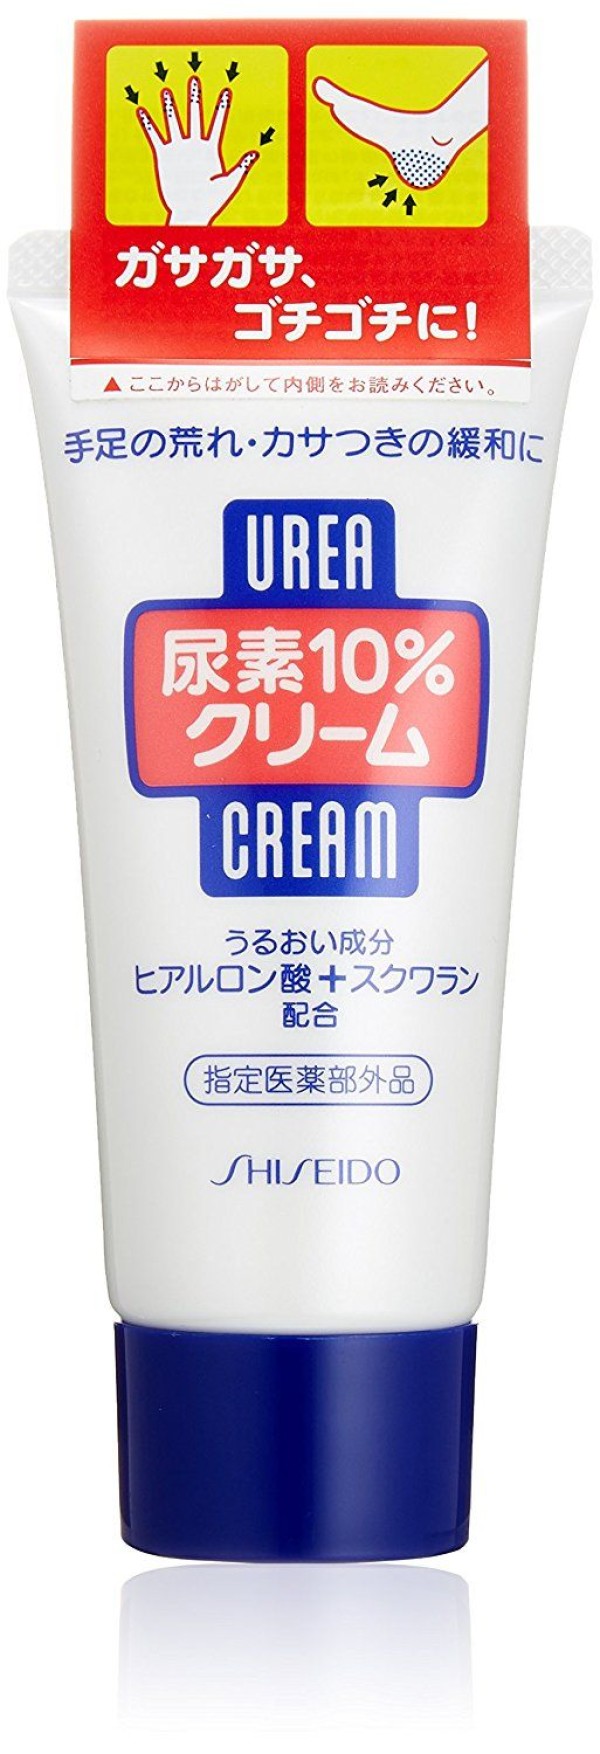 Shiseido Urea Cream 10% 60g